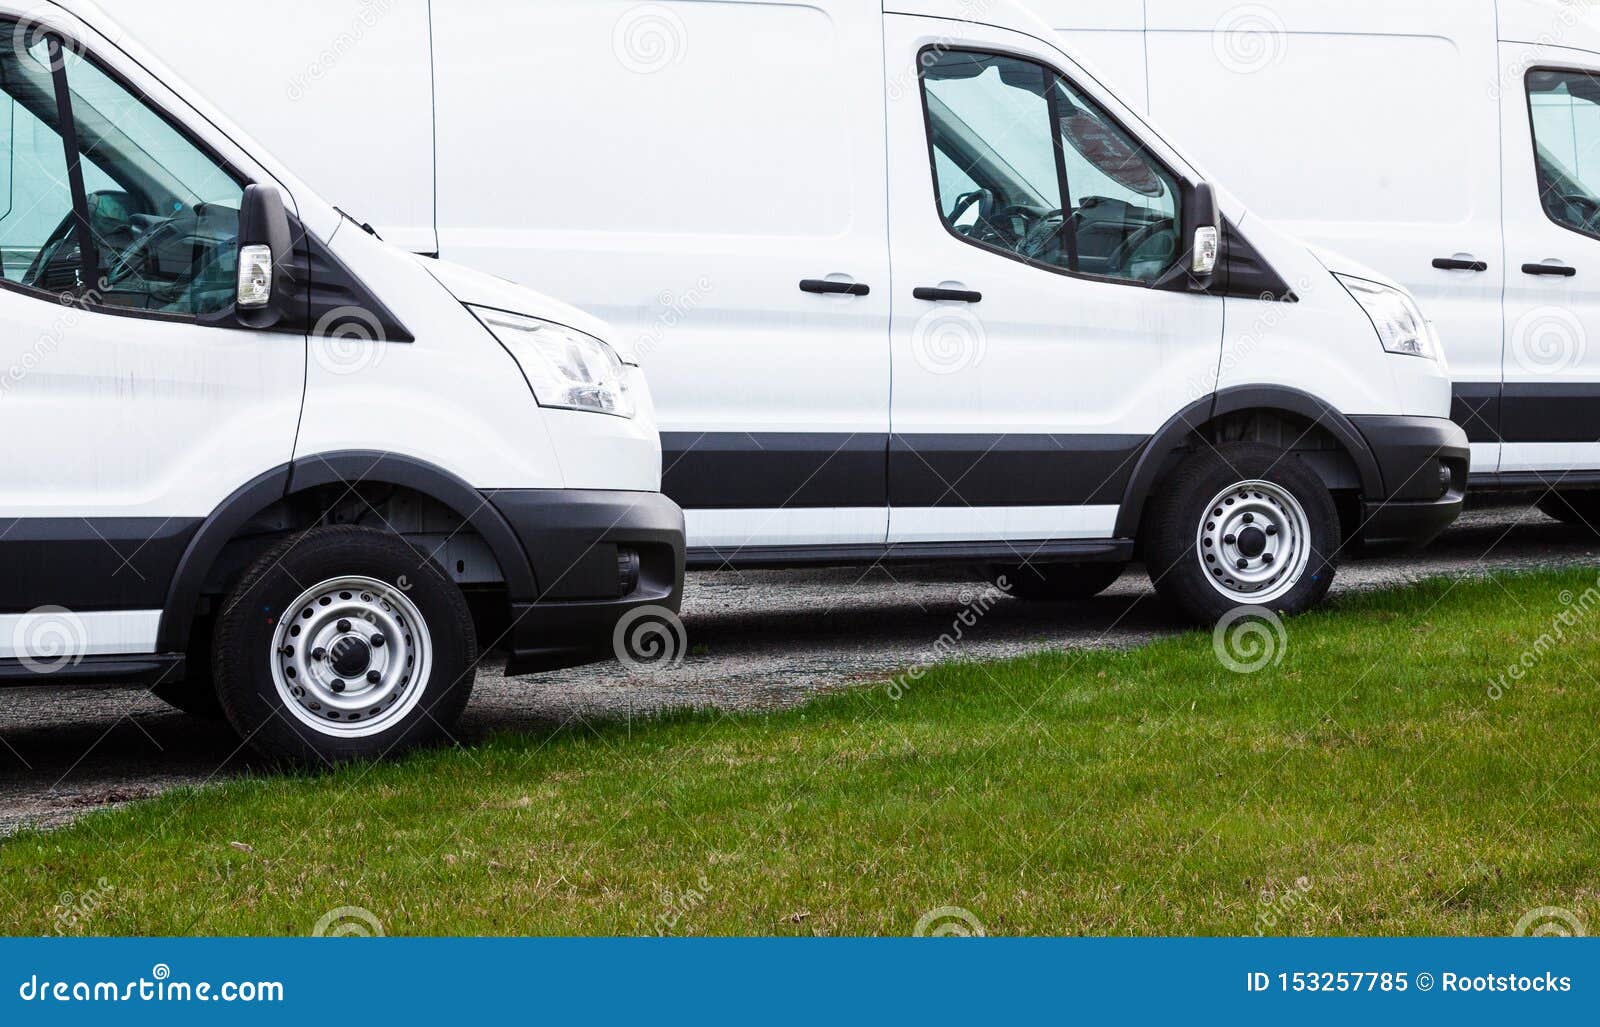 New white vans for sale stock image 